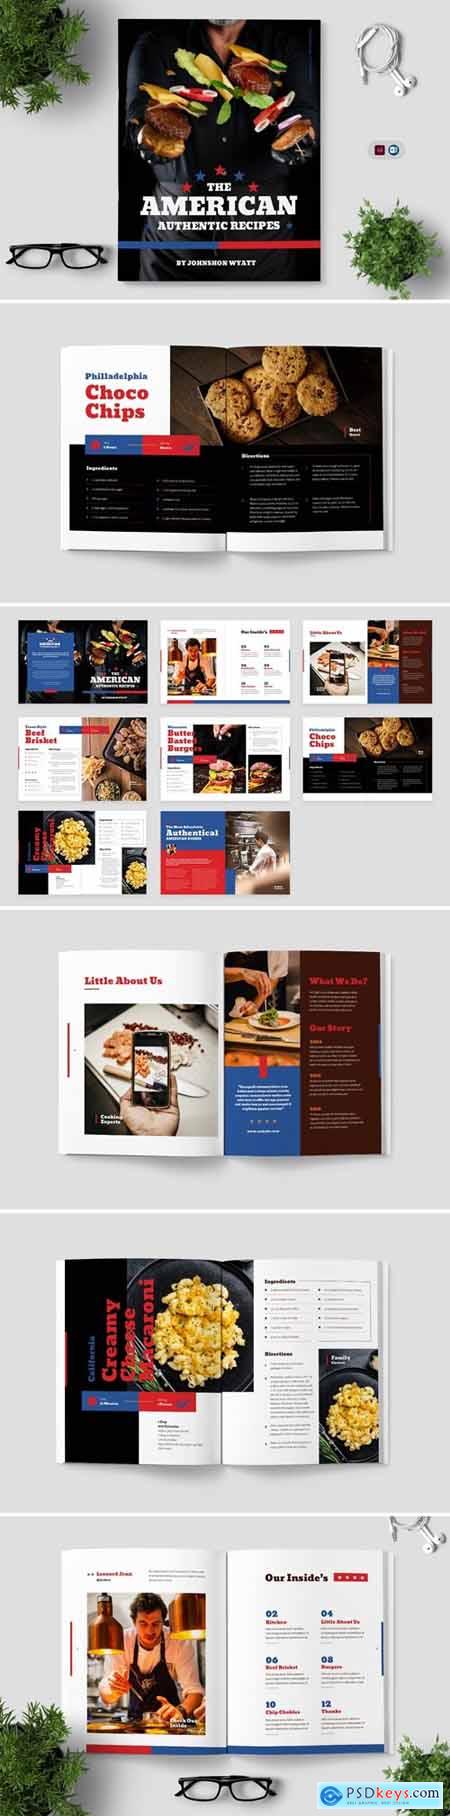 america-menu-recipe-book-template-free-download-photoshop-vector